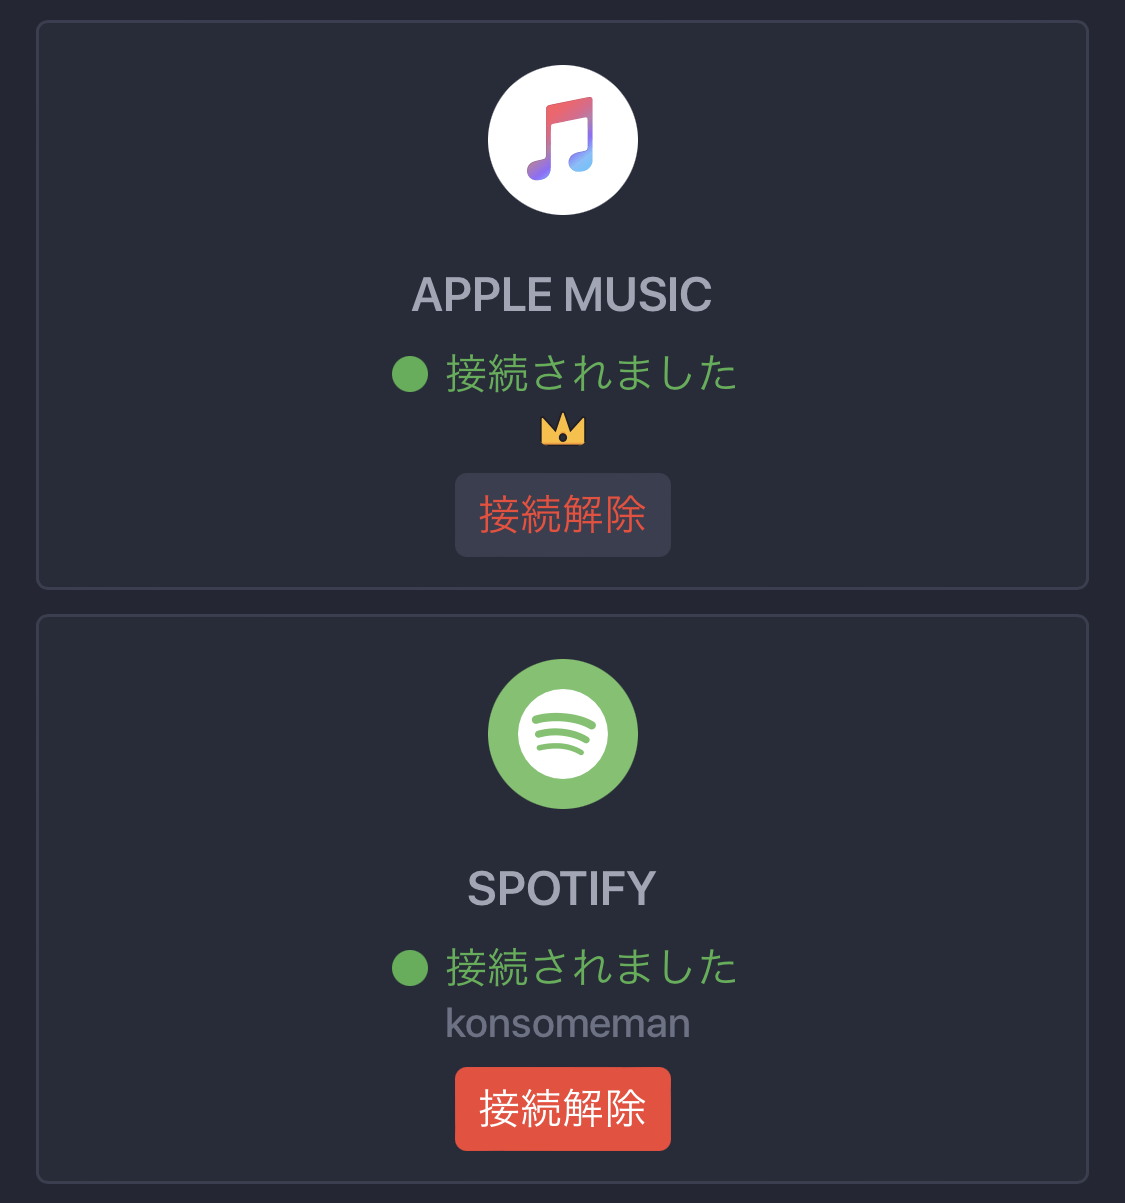 AppleMusicPlaylist to Spotify export import 14